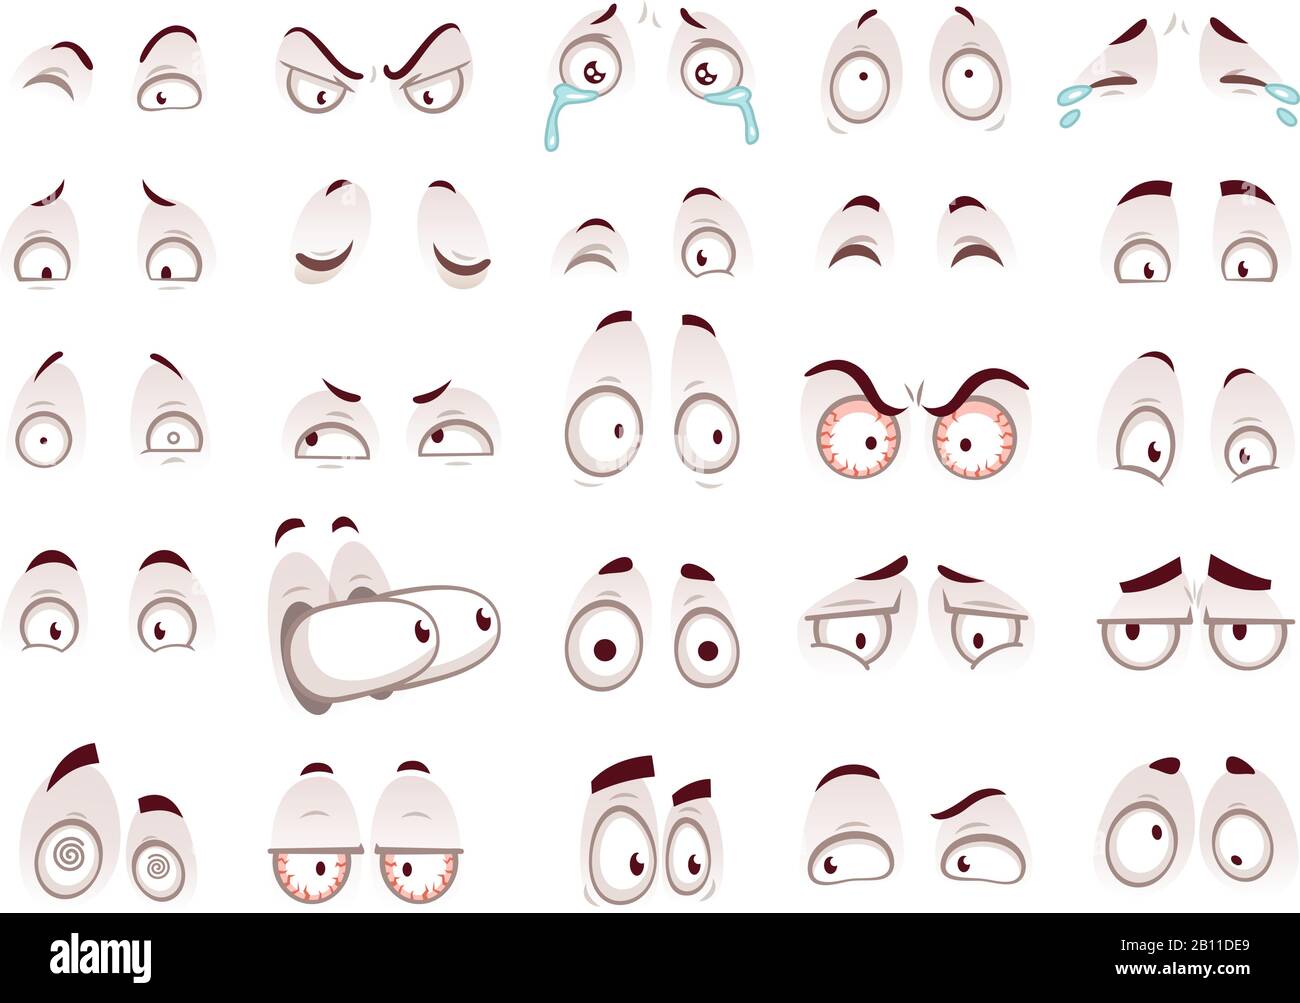 Cartoon-Augen. Komische Augen starrende Blicke, lustige Gesichtsteile Vektor isolierte Illustration Set Stock Vektor